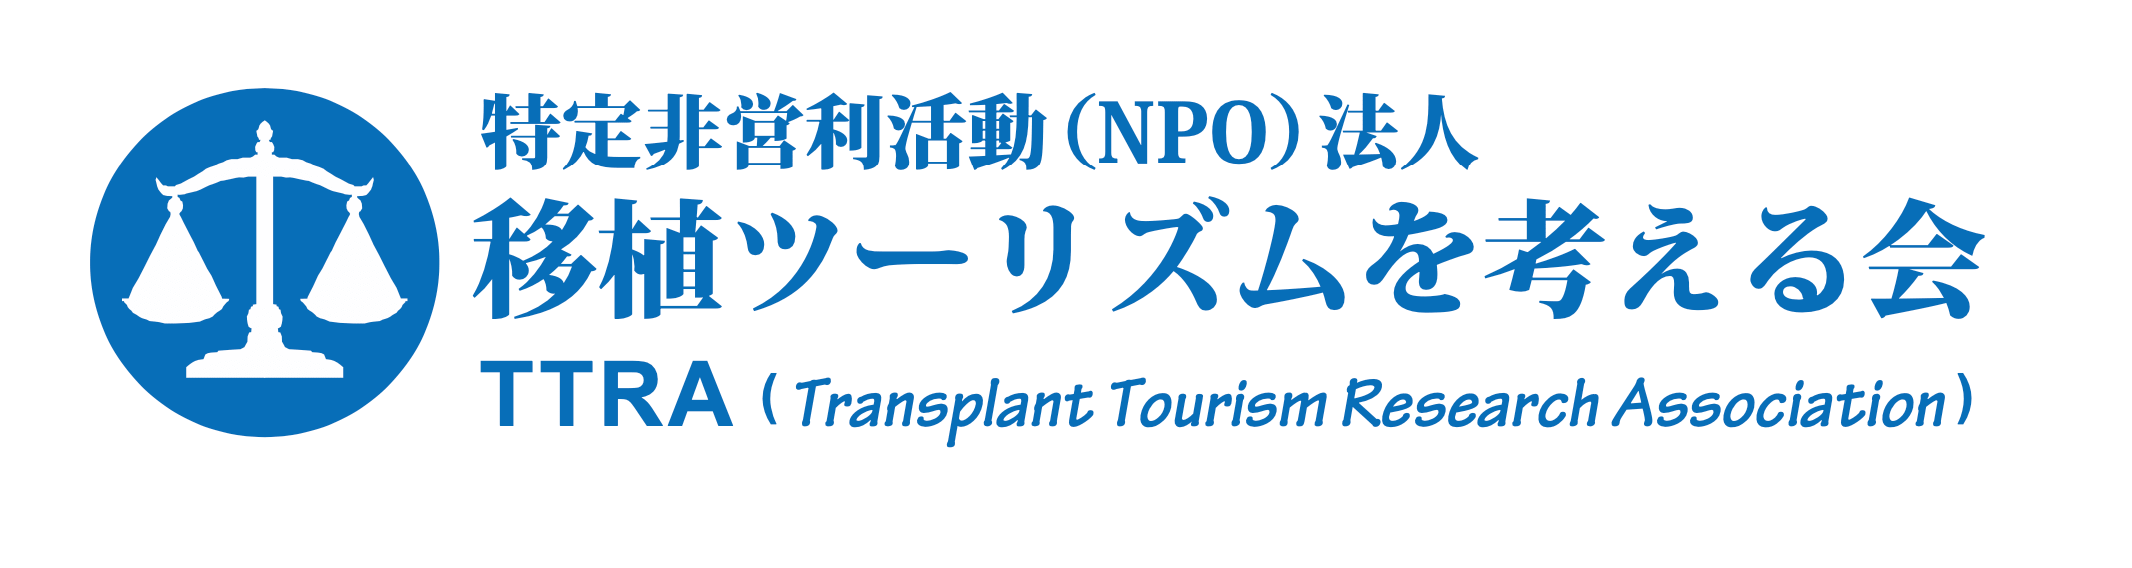 Transplant Tourism Research Association (TTRA) Japan